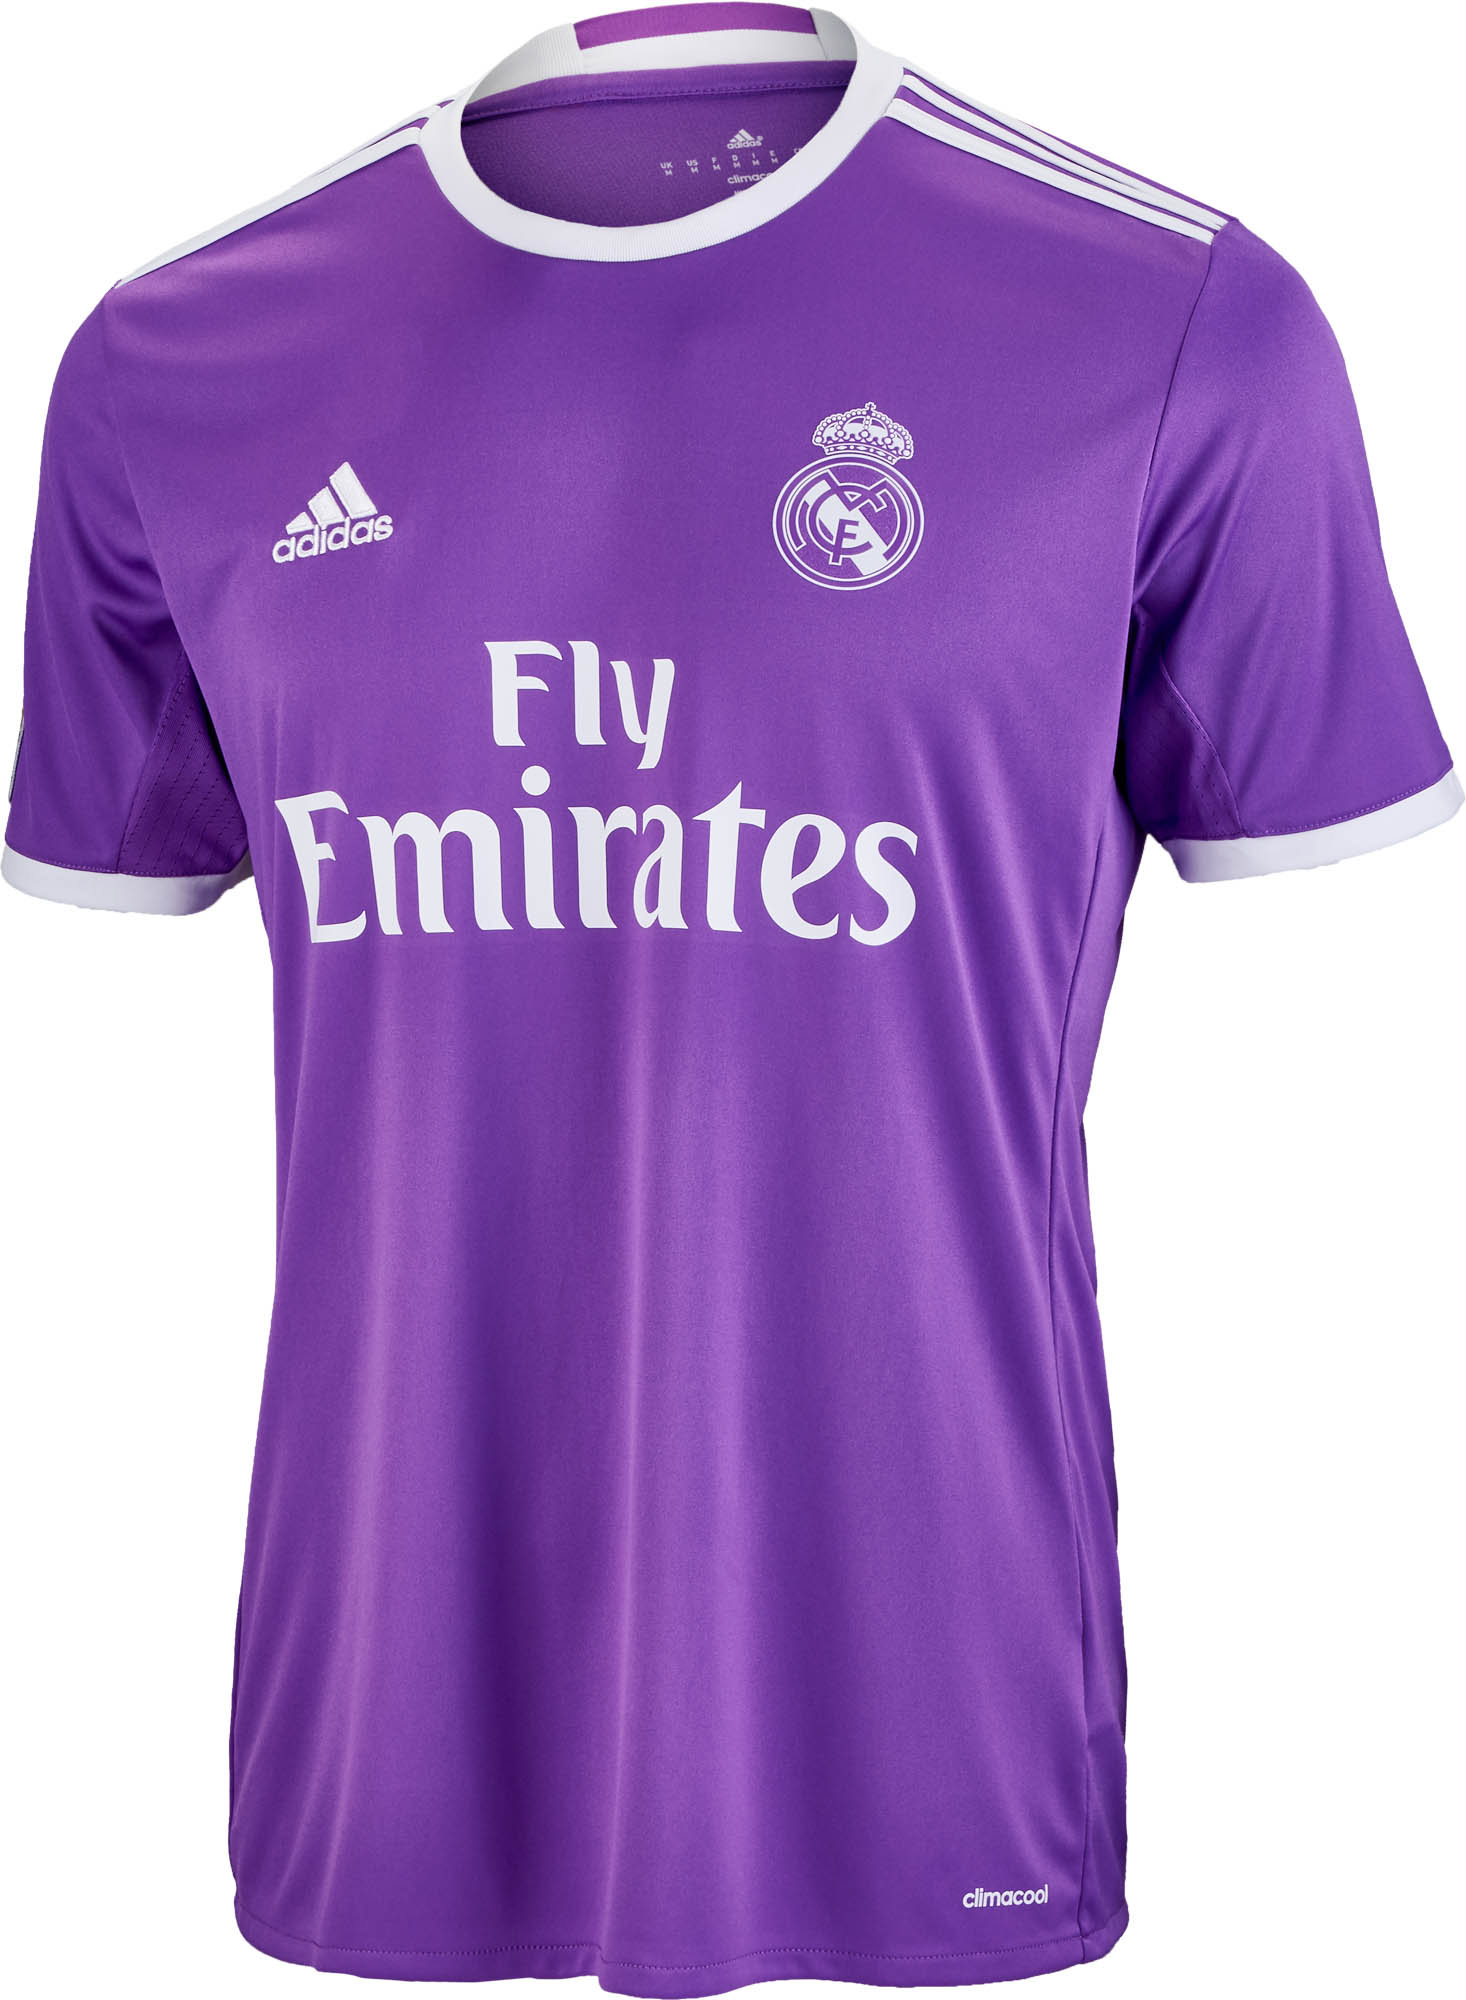 adidas Real Madrid Jersey - 2016/17 Real Madrid Away Jerseys